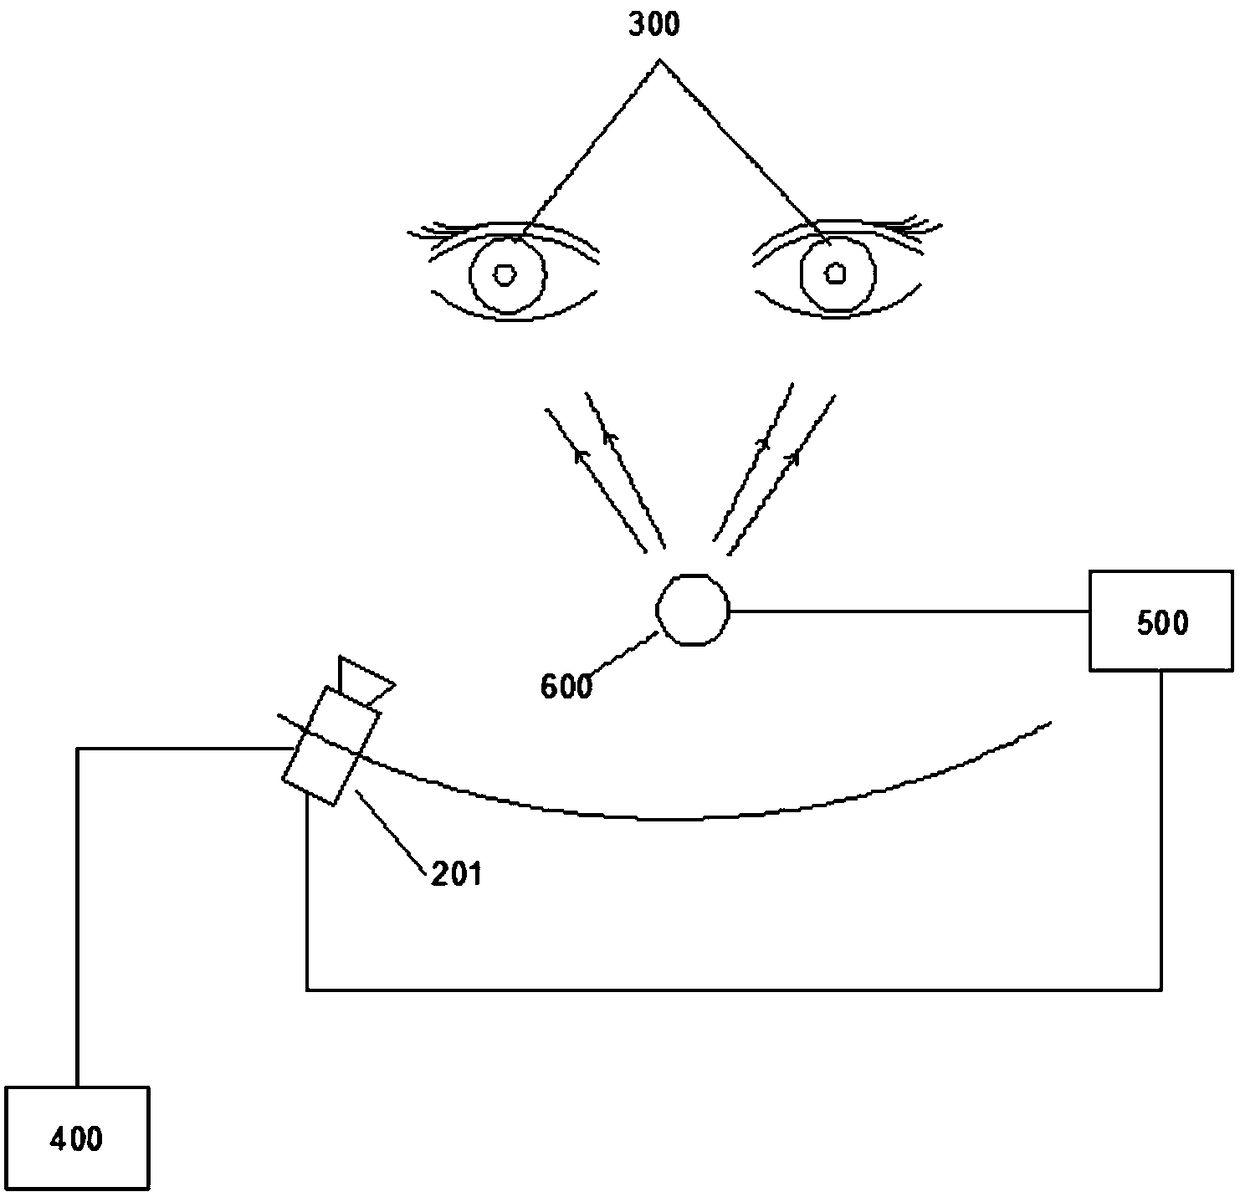 Iris information measurement system based on illumination control